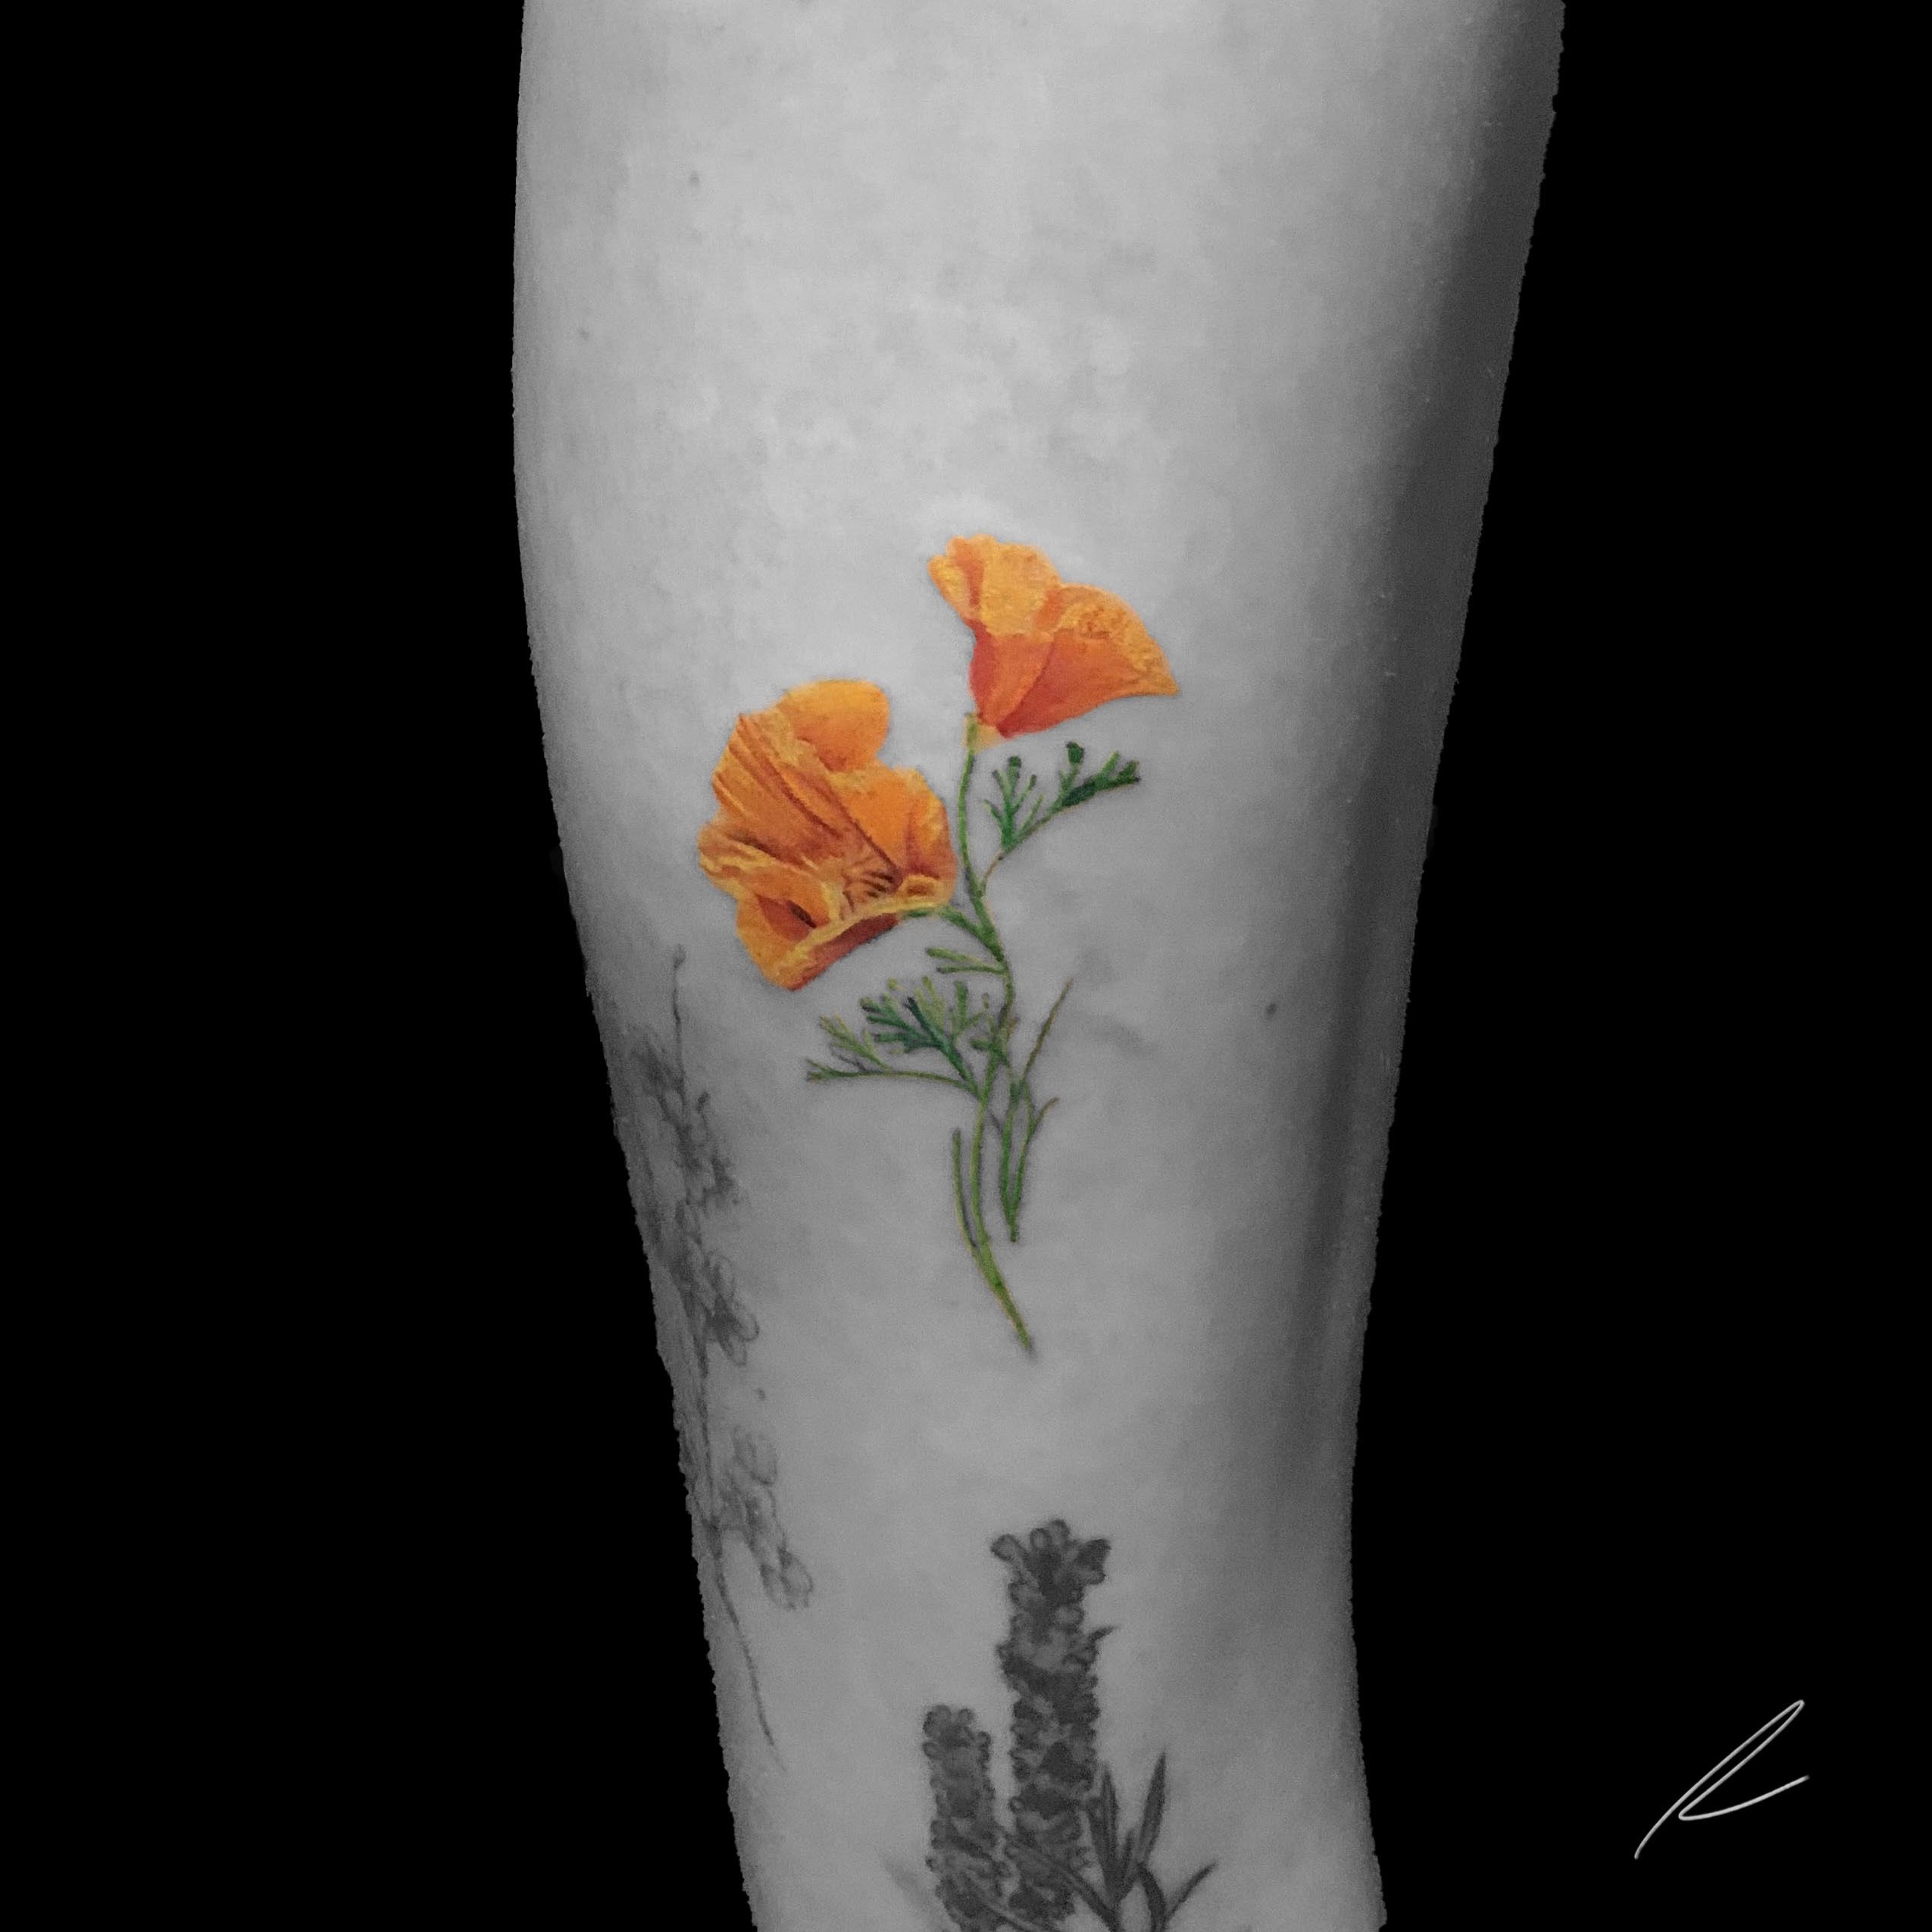 Pacific Fogeood California Poppies and Lady Fern for Jen  californiapoppy dogwood ferntattoo poppytattoo inked tattoo tattoos   Instagram